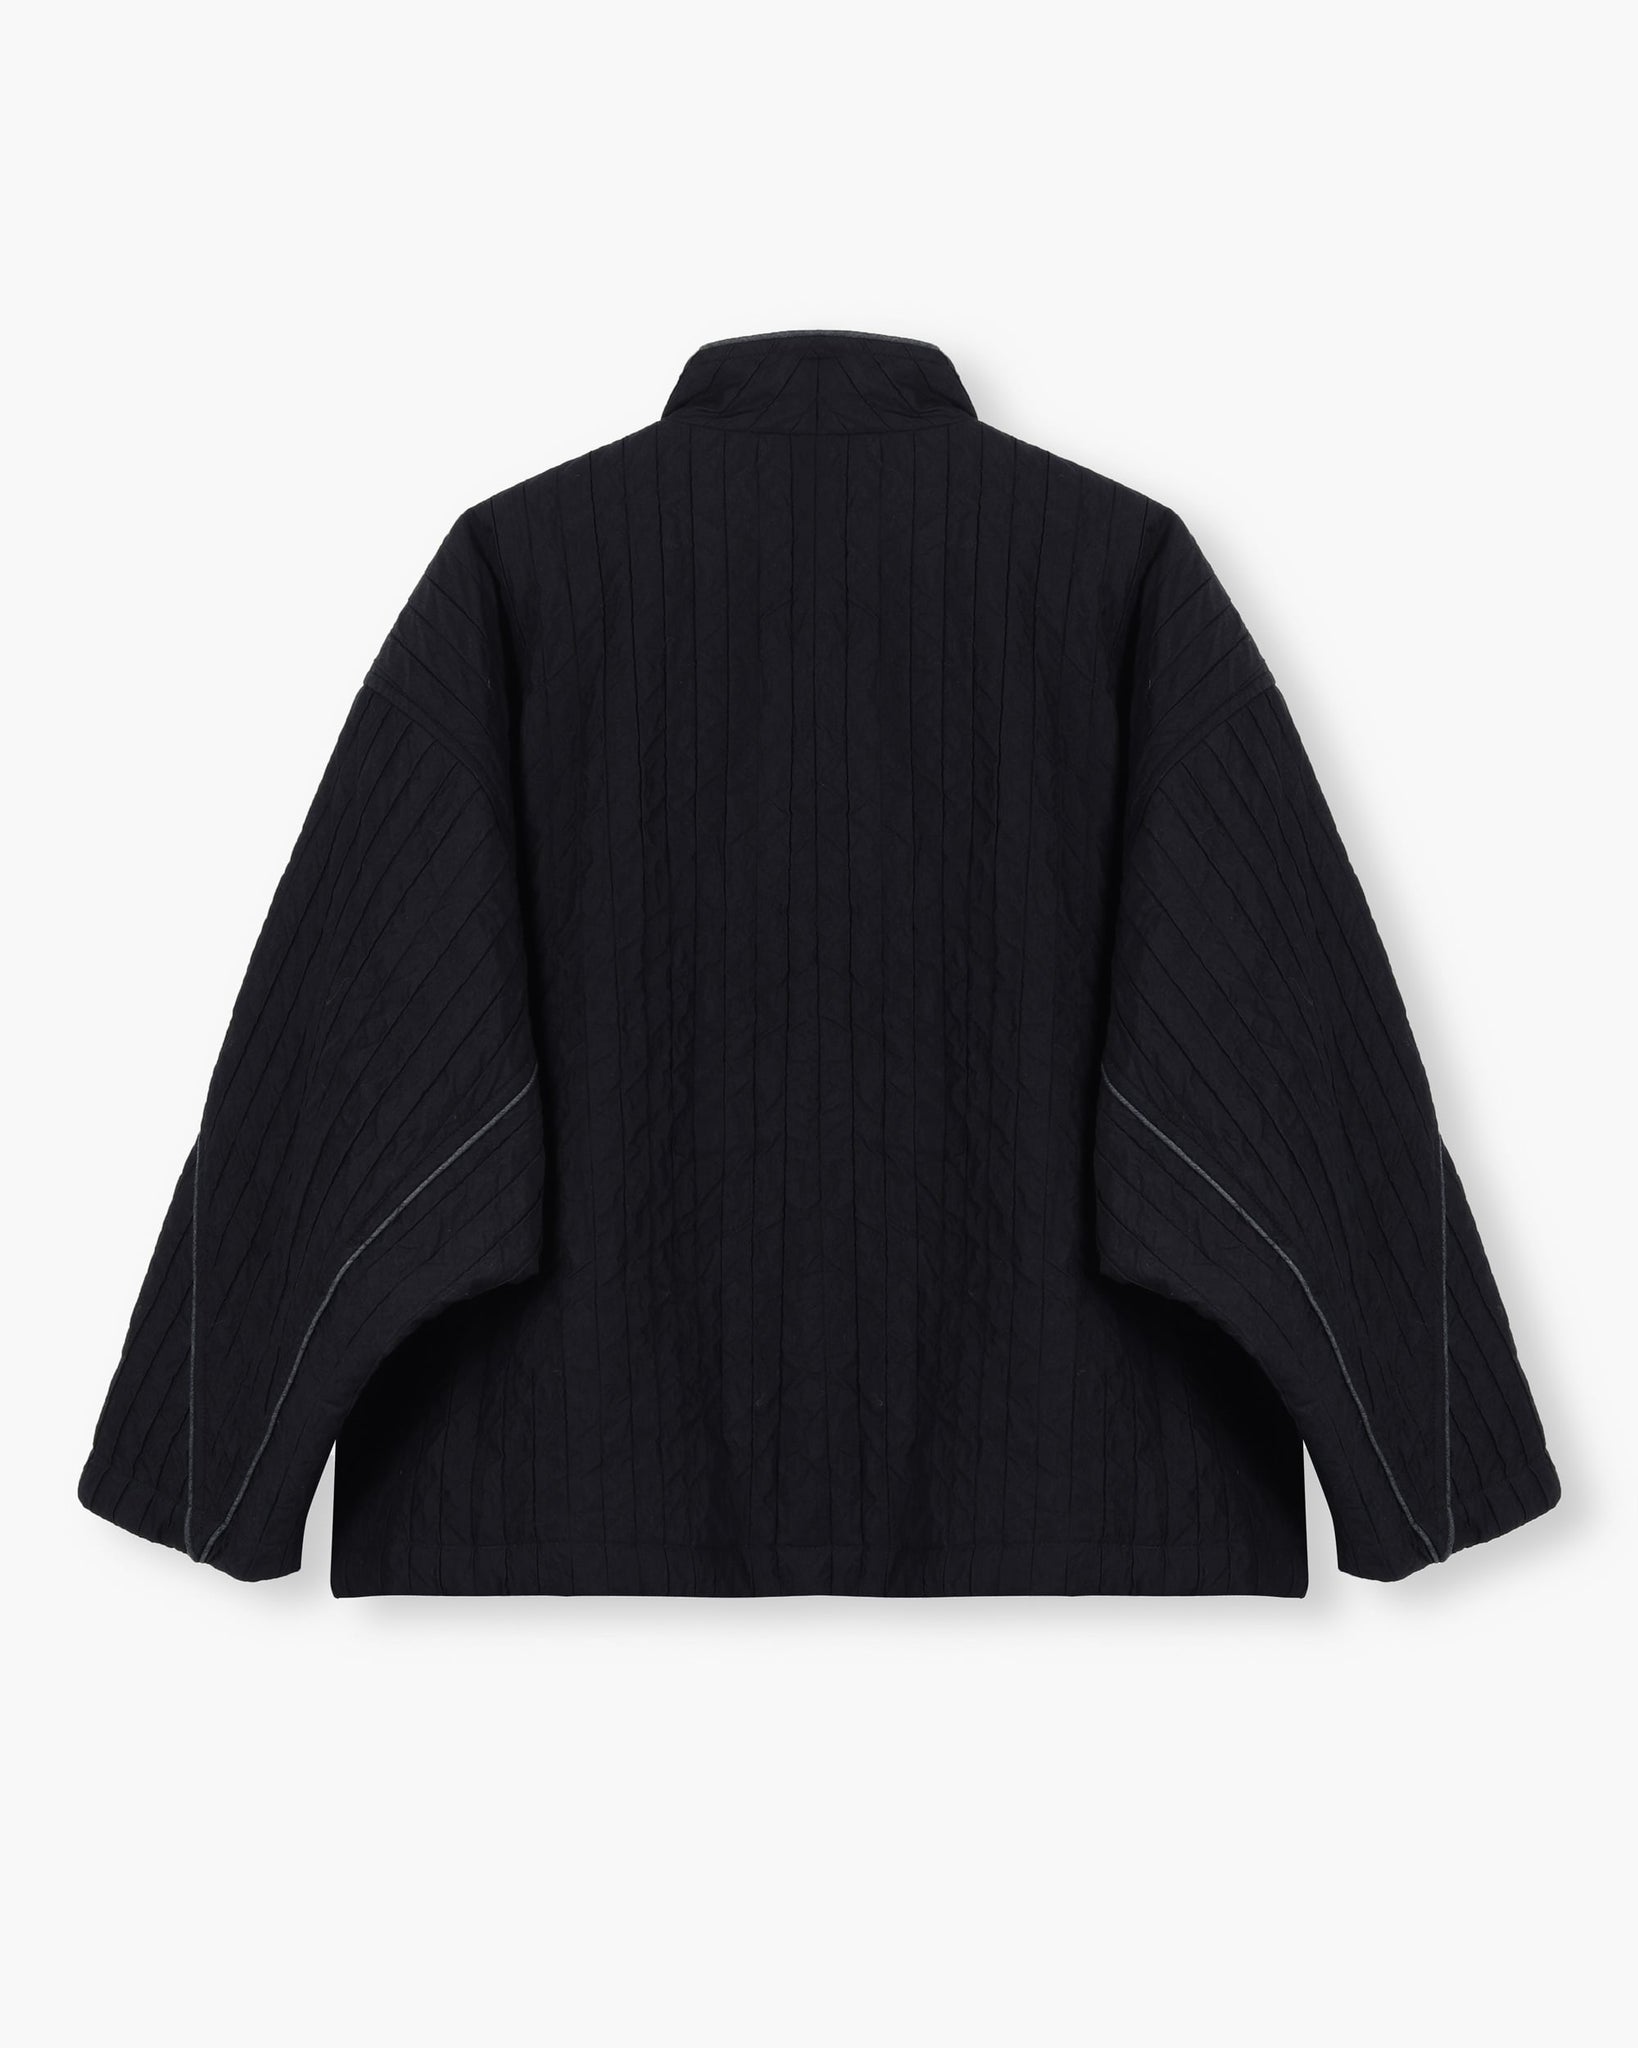 ROSEN Shibui Padded Coat in Pleated Cotton